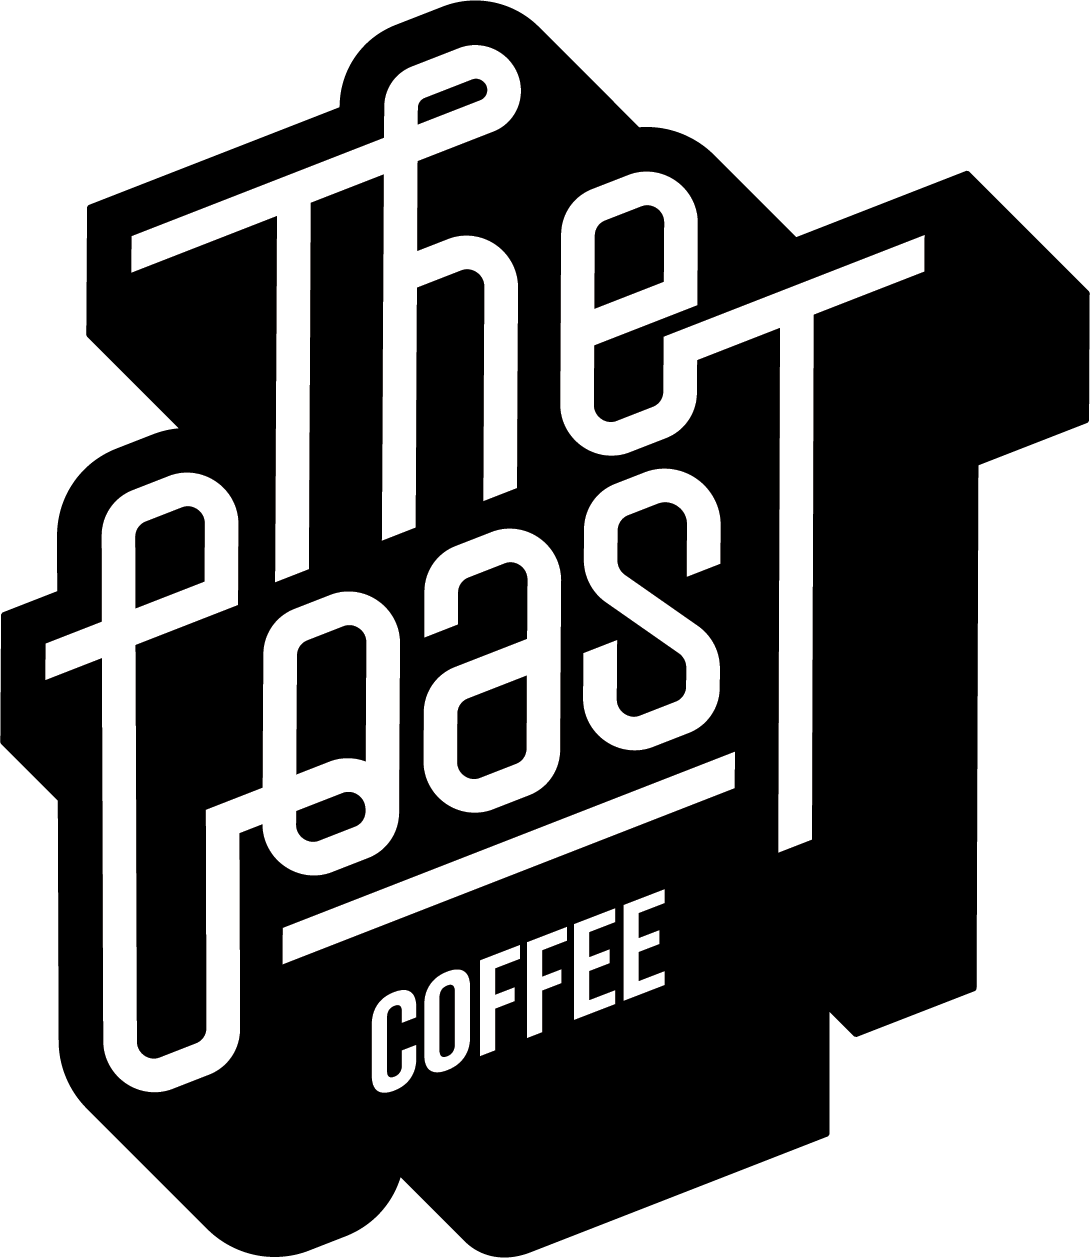 The Coast Coffee